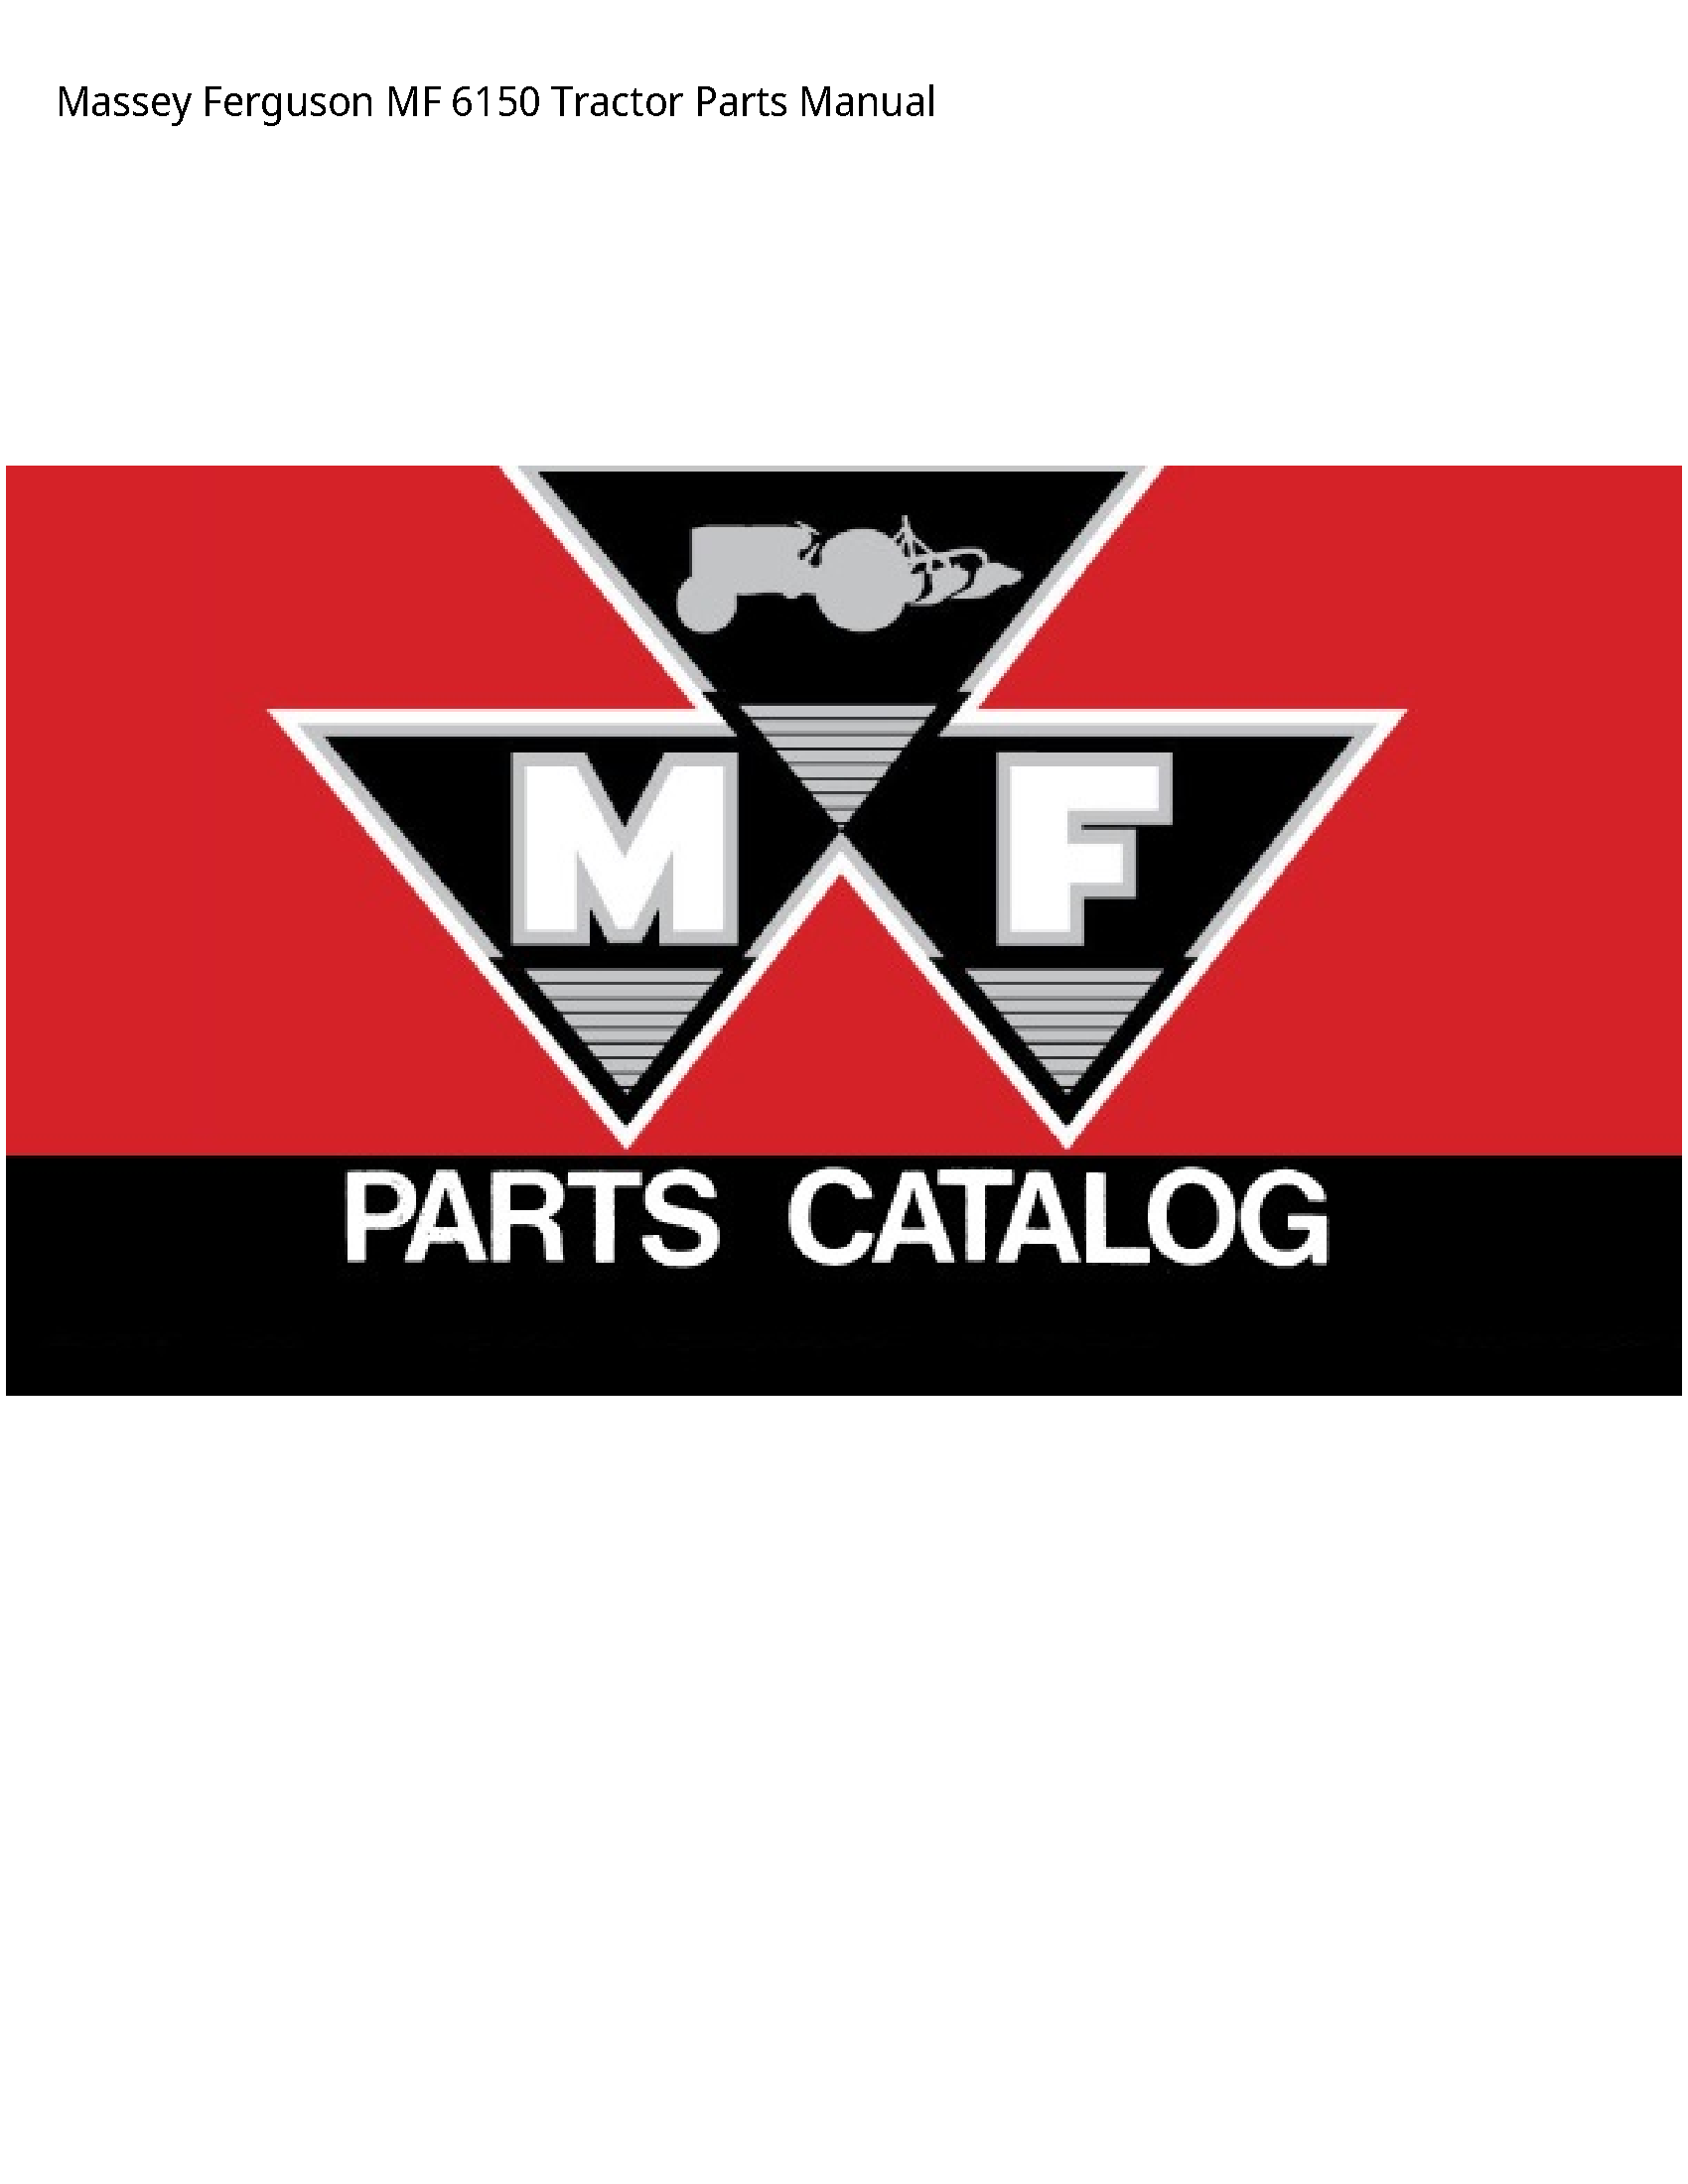 Massey Ferguson 6150 MF Tractor Parts manual